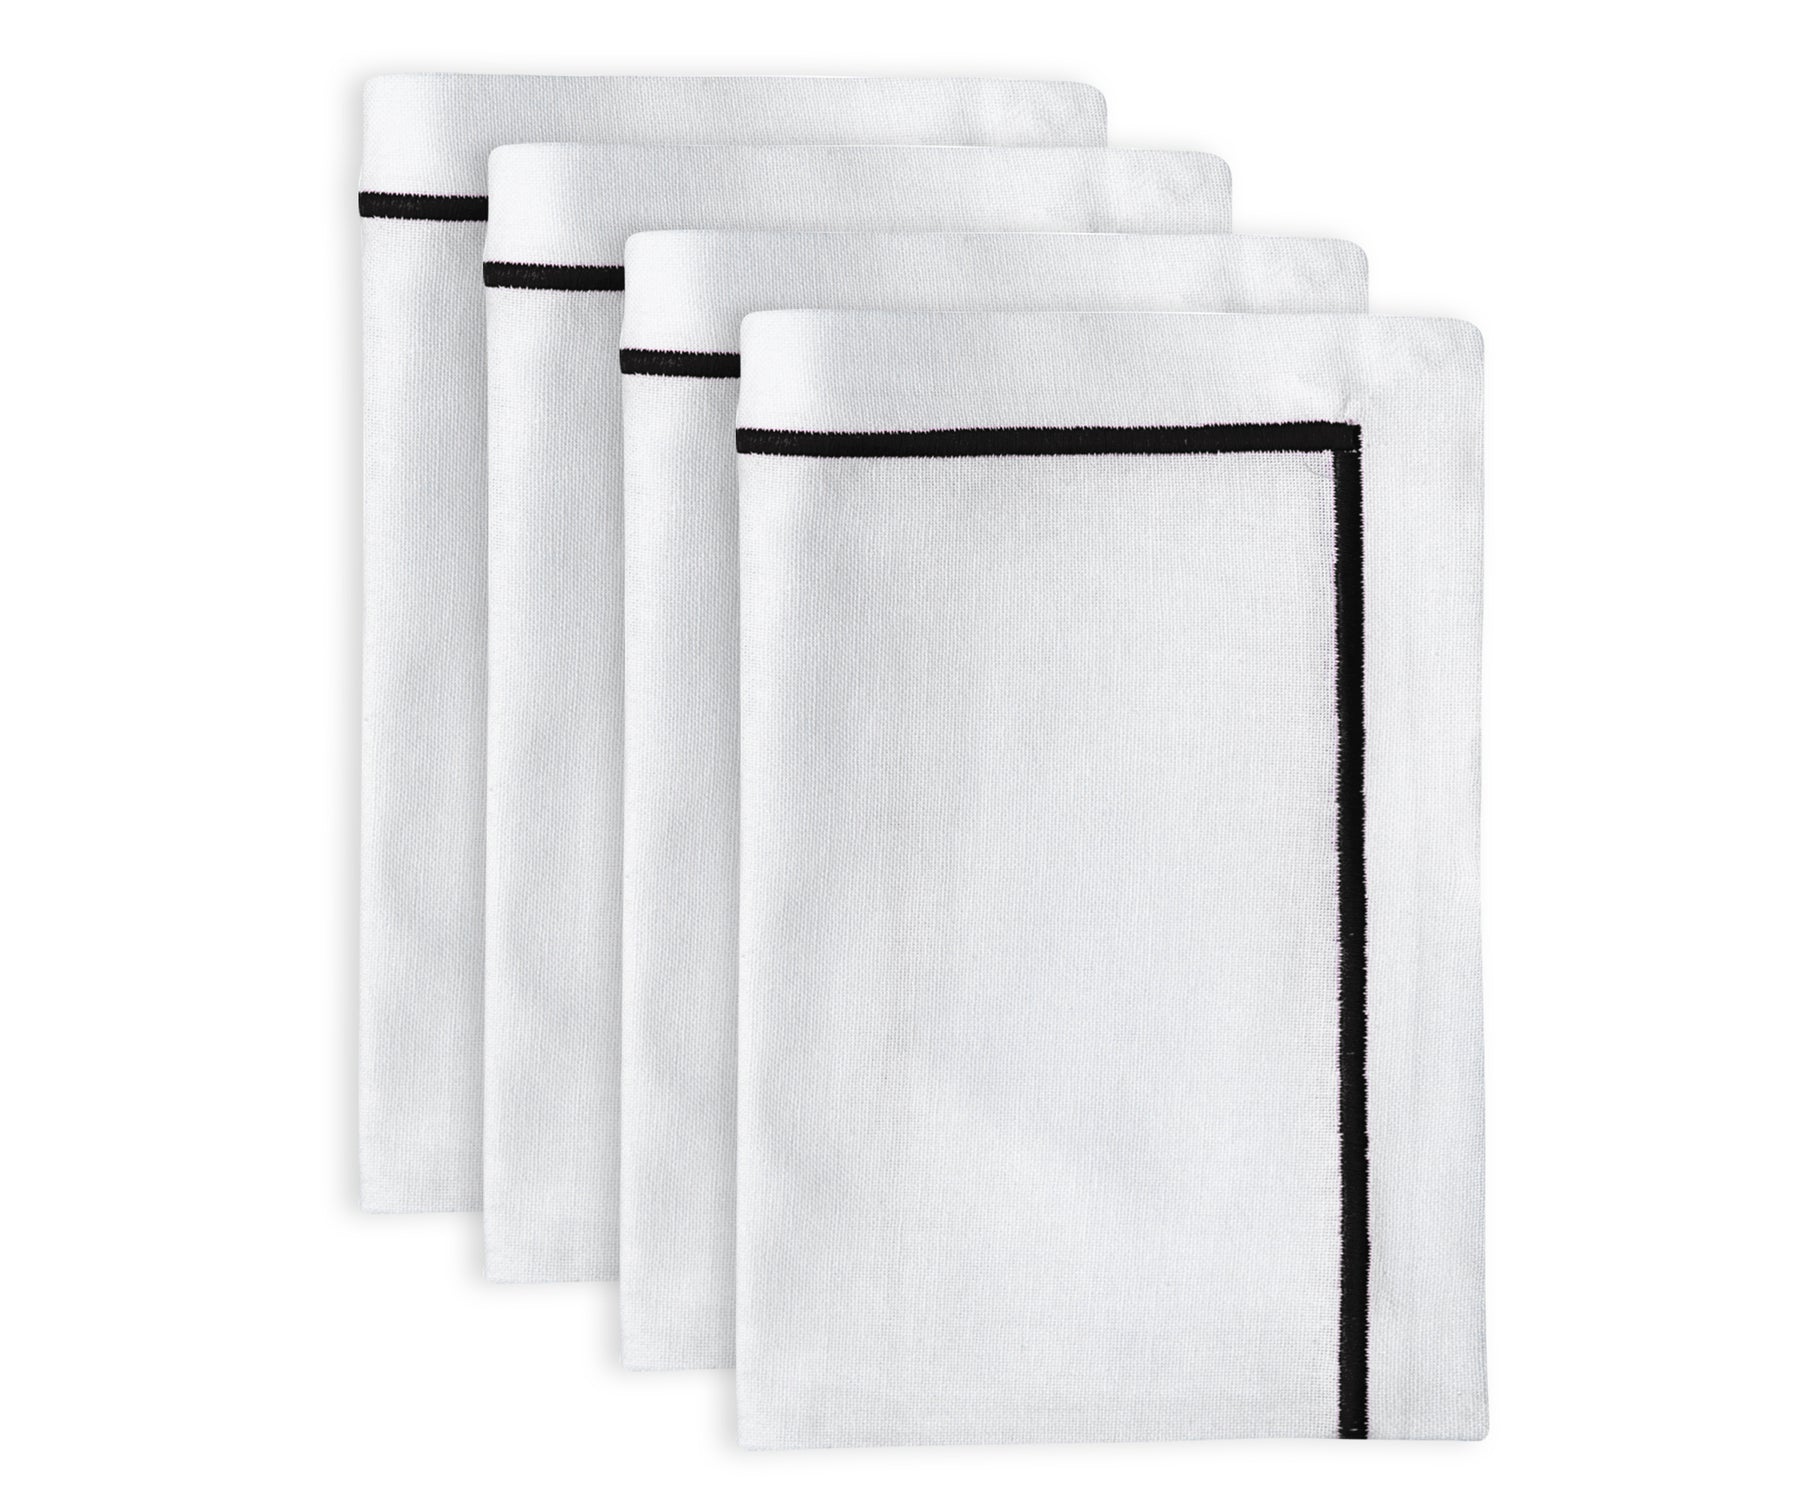 Black cloth napkins, white napkins with black border set of 4, embroidered napkins